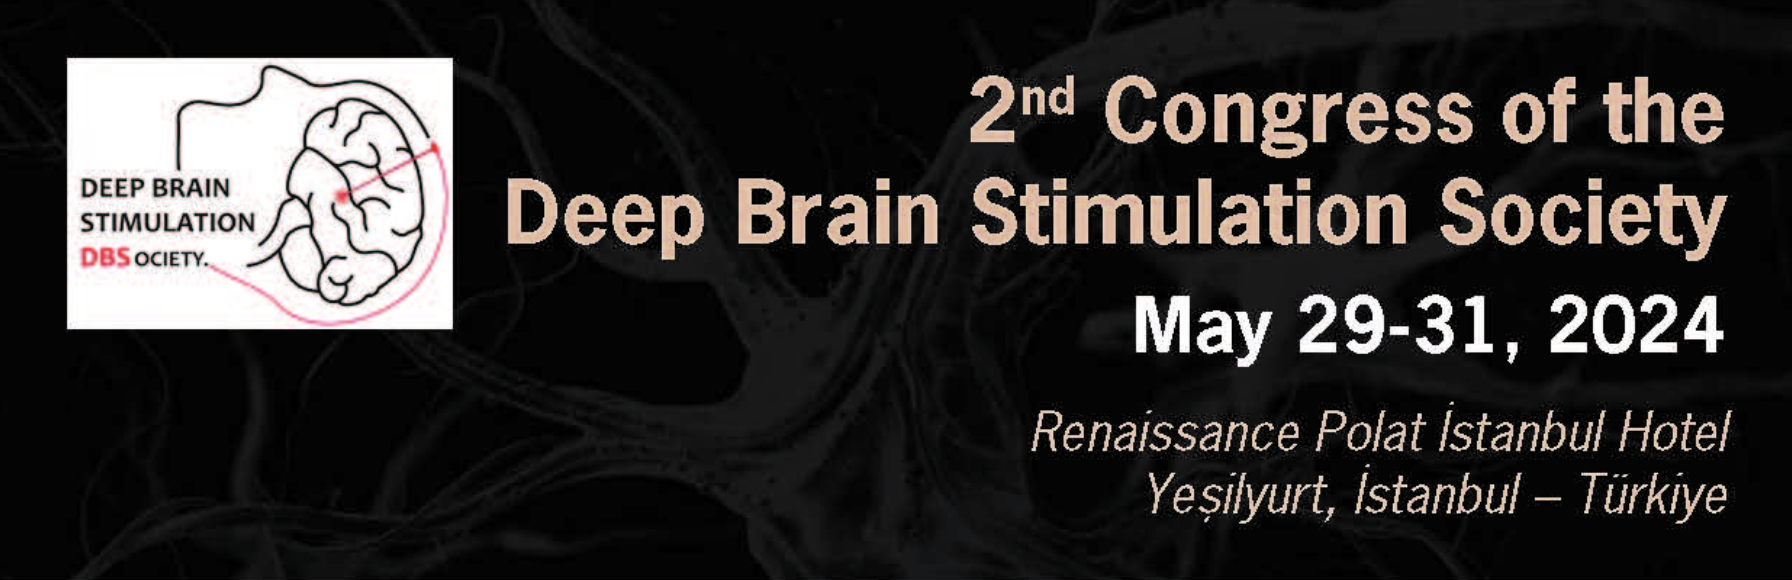 2nd Congress of the Deep Brain Stimulation Society